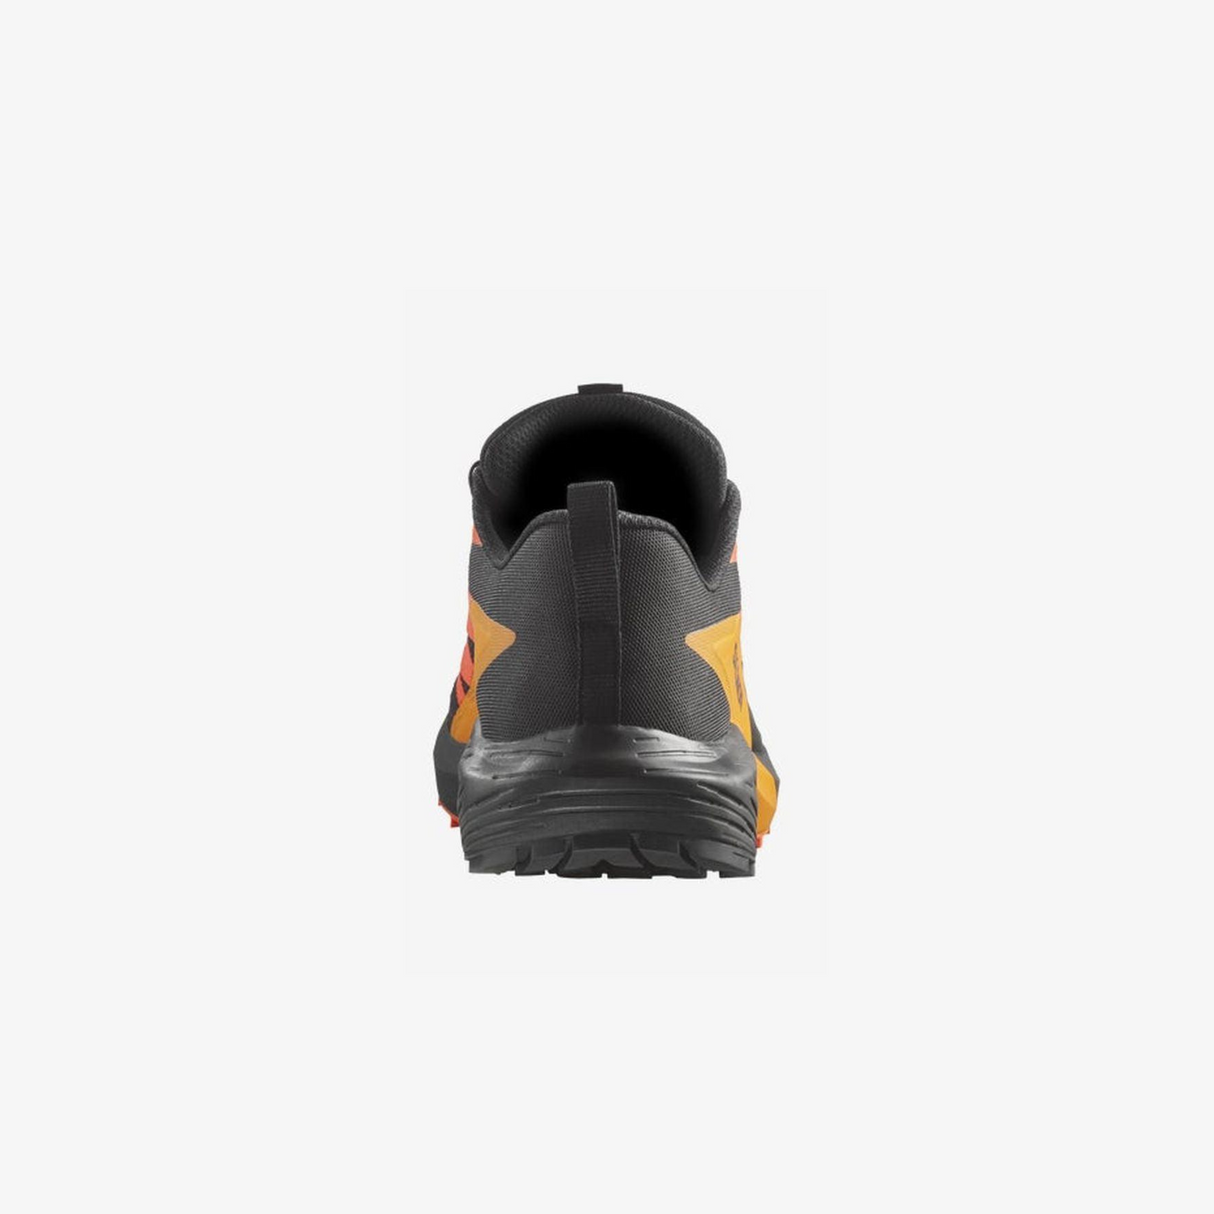 Salomon - Salomon Men's Sense Ride 5 GTX Trail Running Shoes (Black/ Scarlet Ibis/ Turmeric) - Cam2 